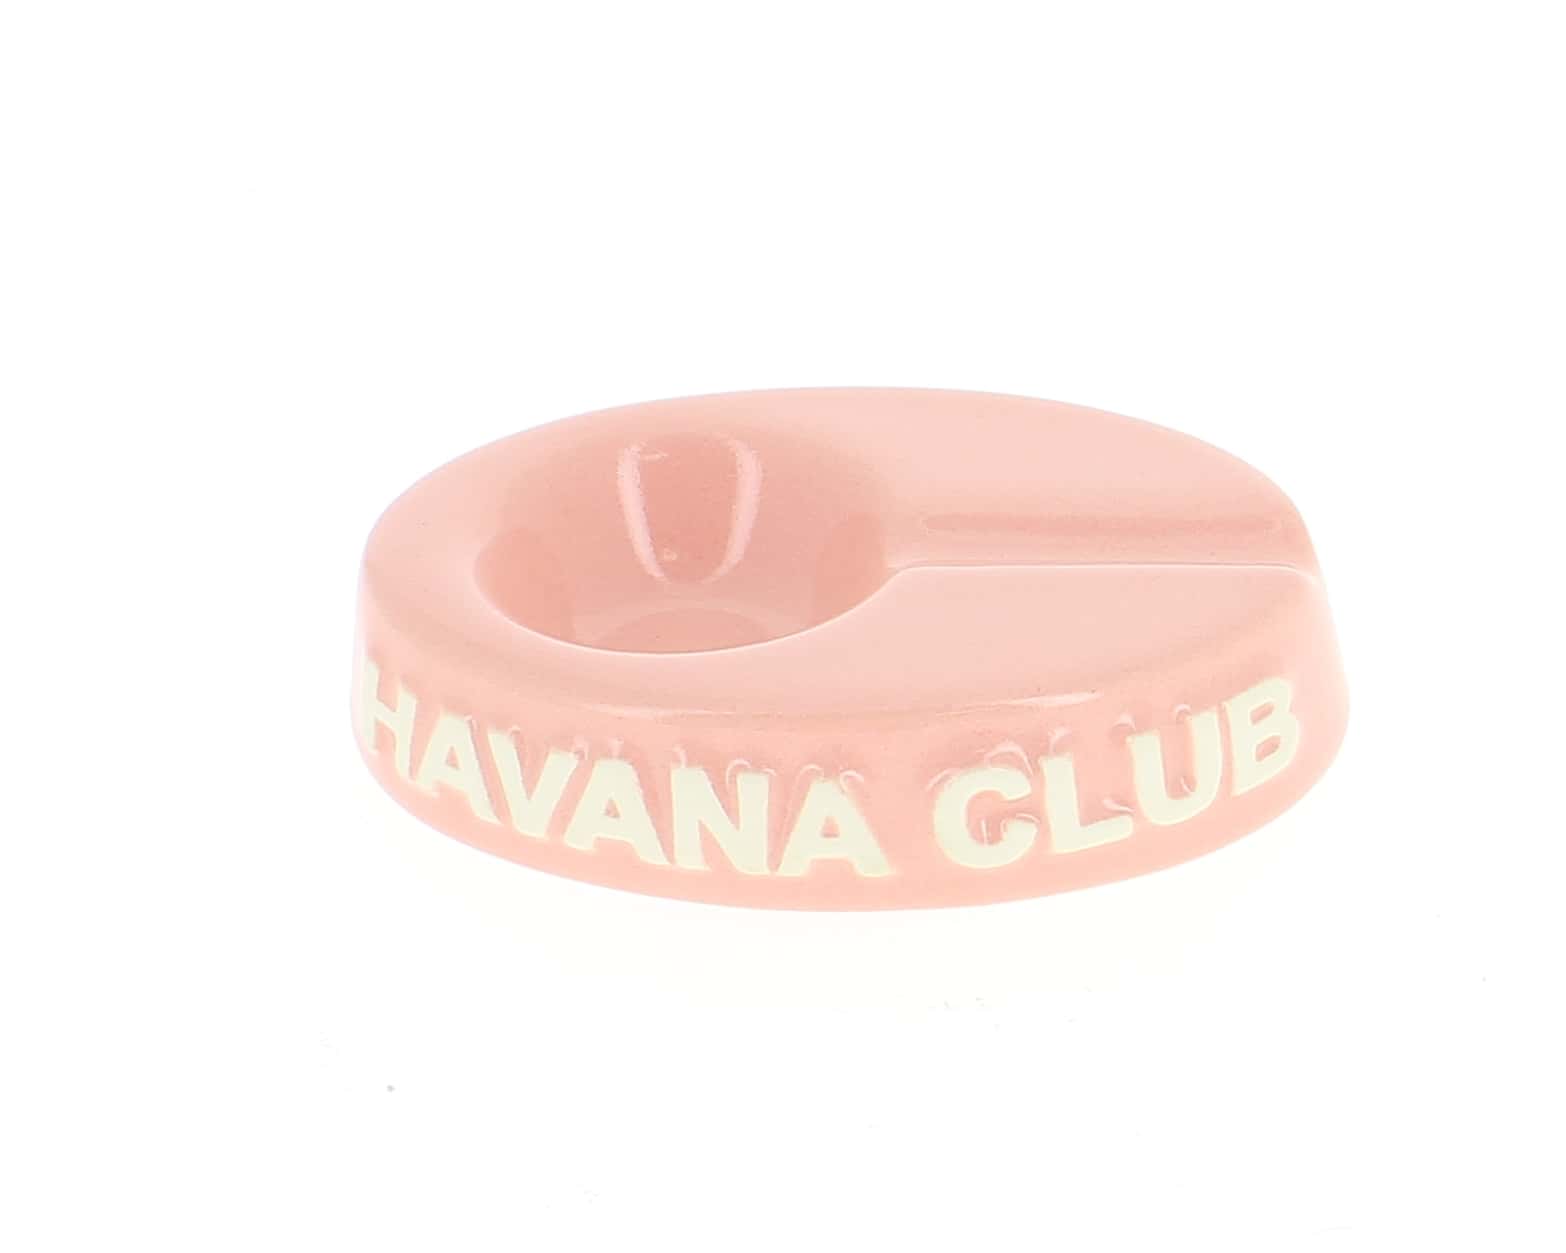 Photo de Cendrier Havana Club Chico Rose